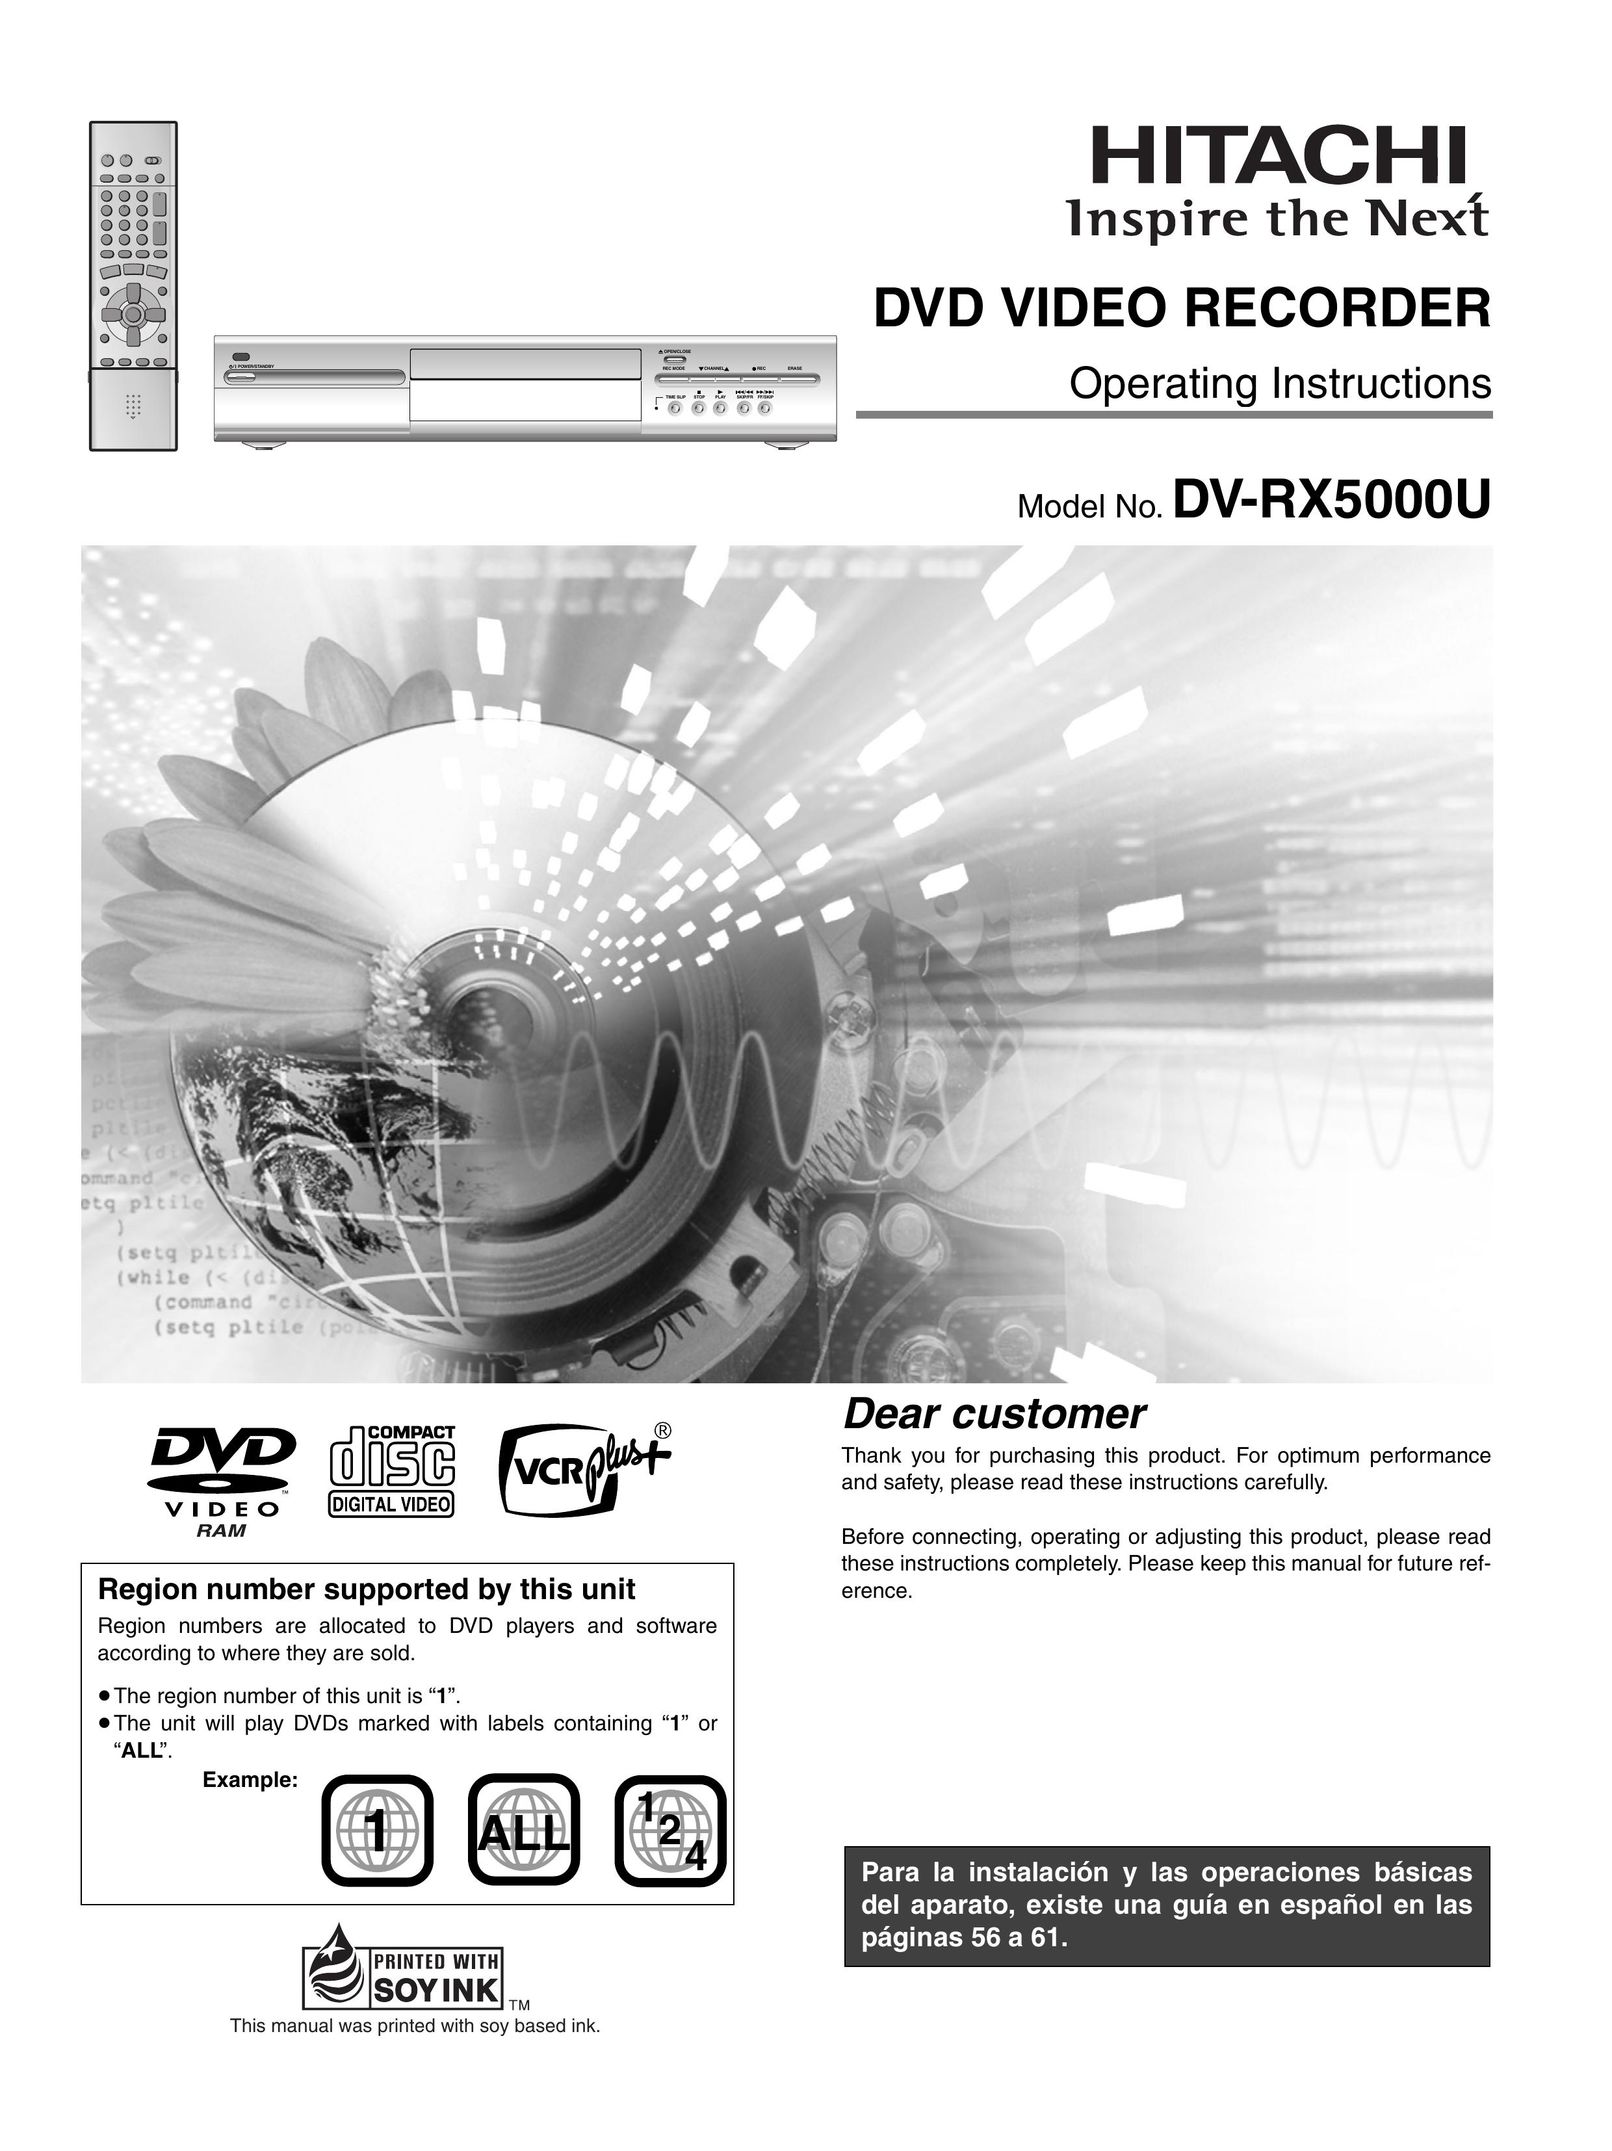 Hitachi DV-RX5000U DVD Recorder User Manual